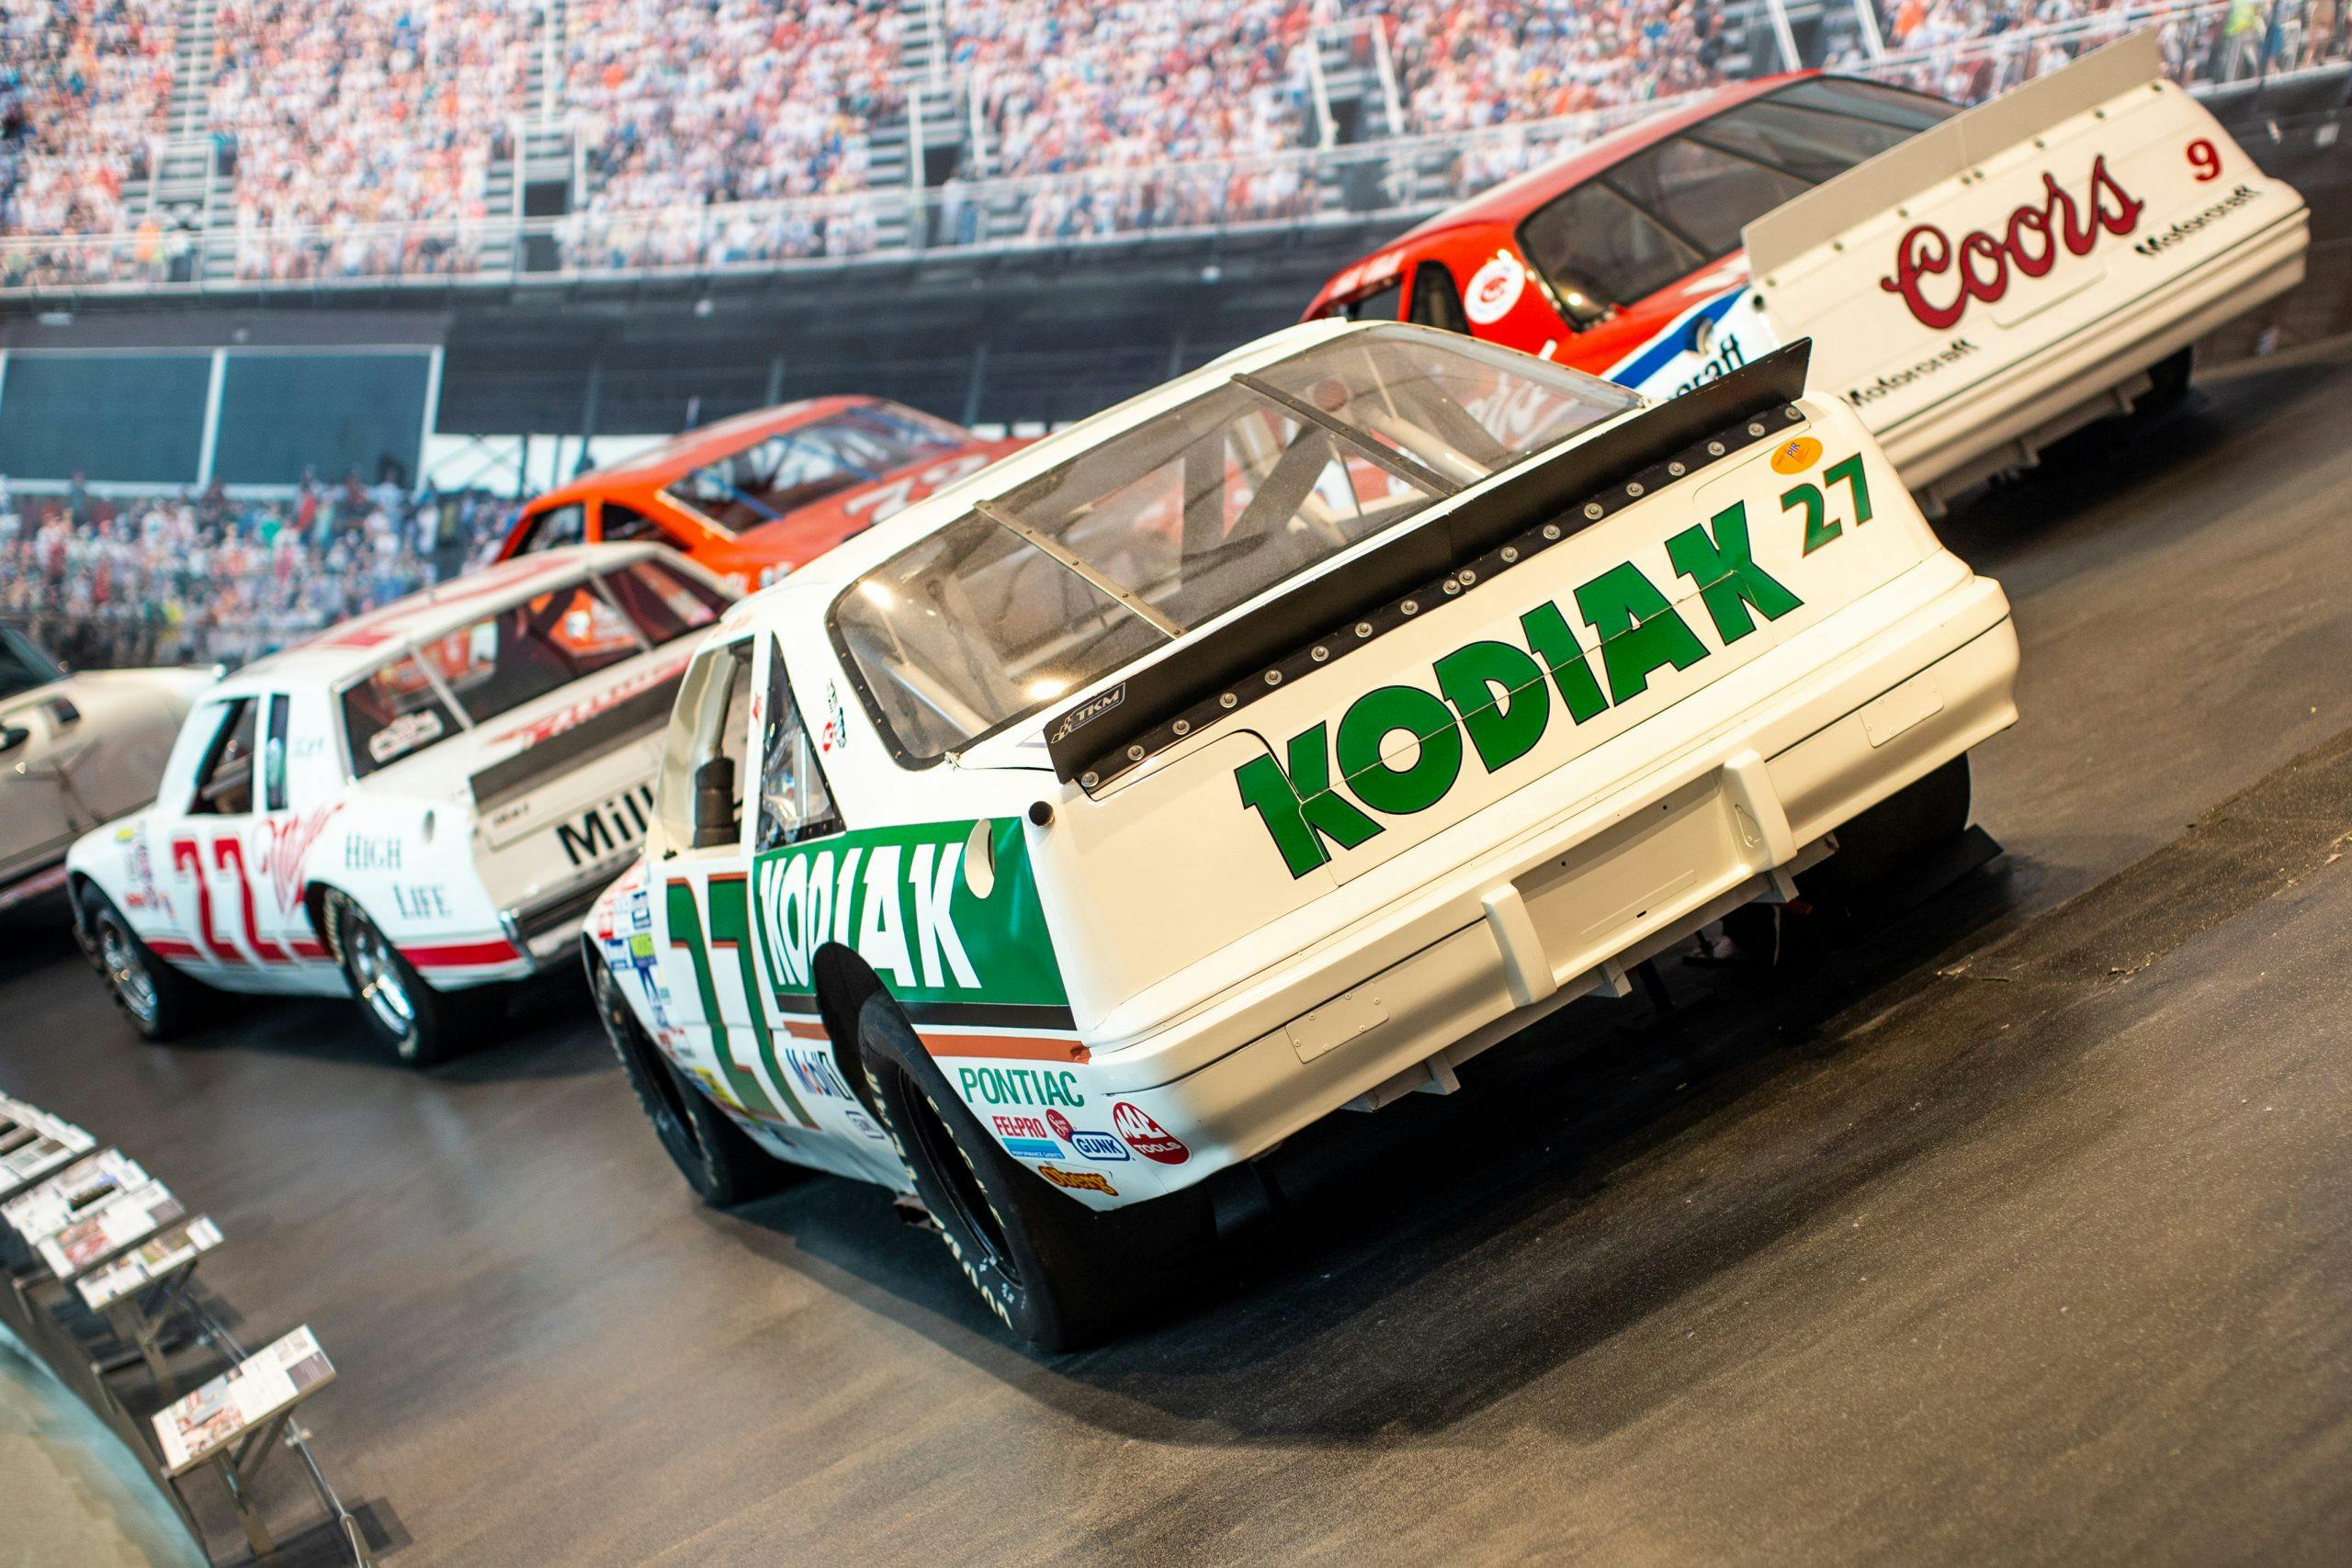 NASCAR Hall of Fame Kodiak race car rear